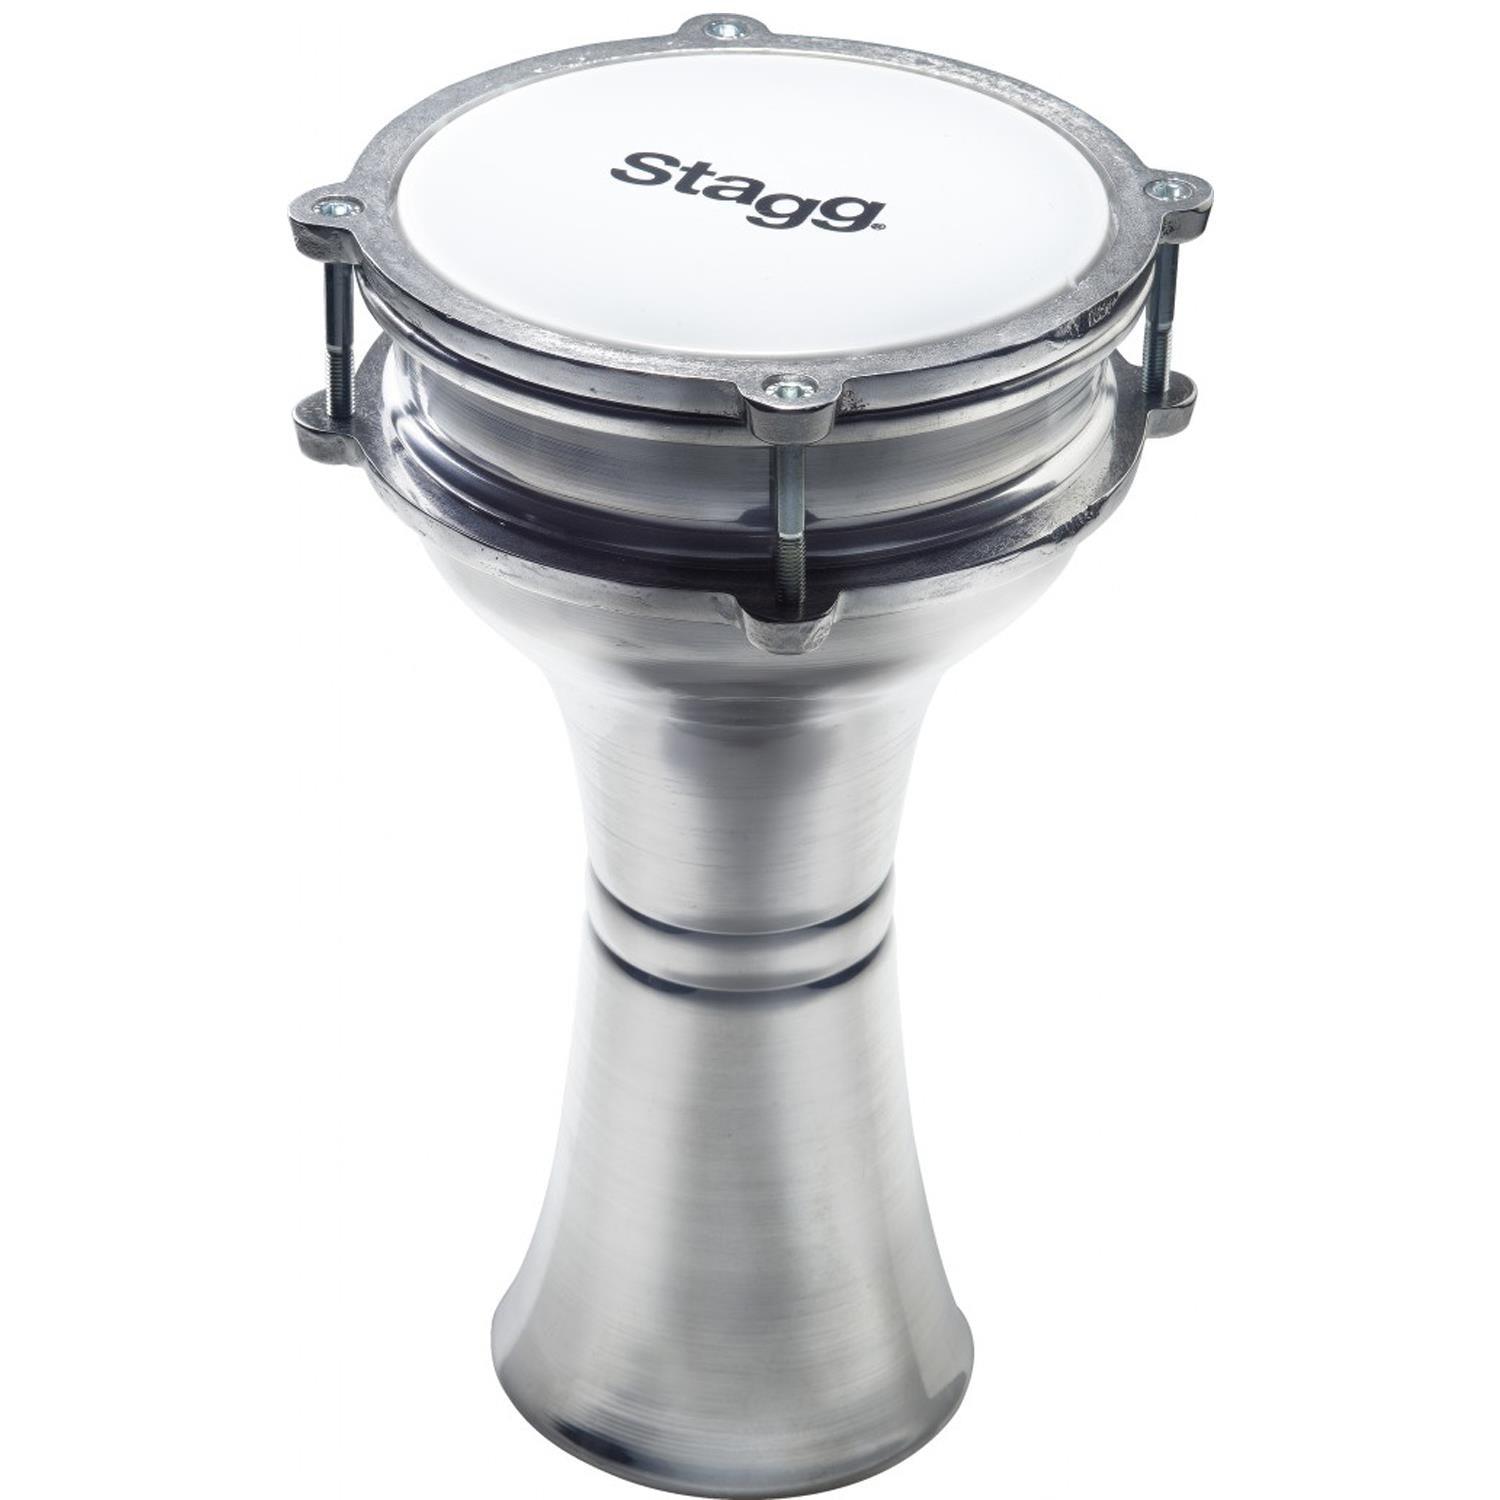 Stagg ALM.PL15 Darbuka 15cm Percussion Drum - DY Pro Audio